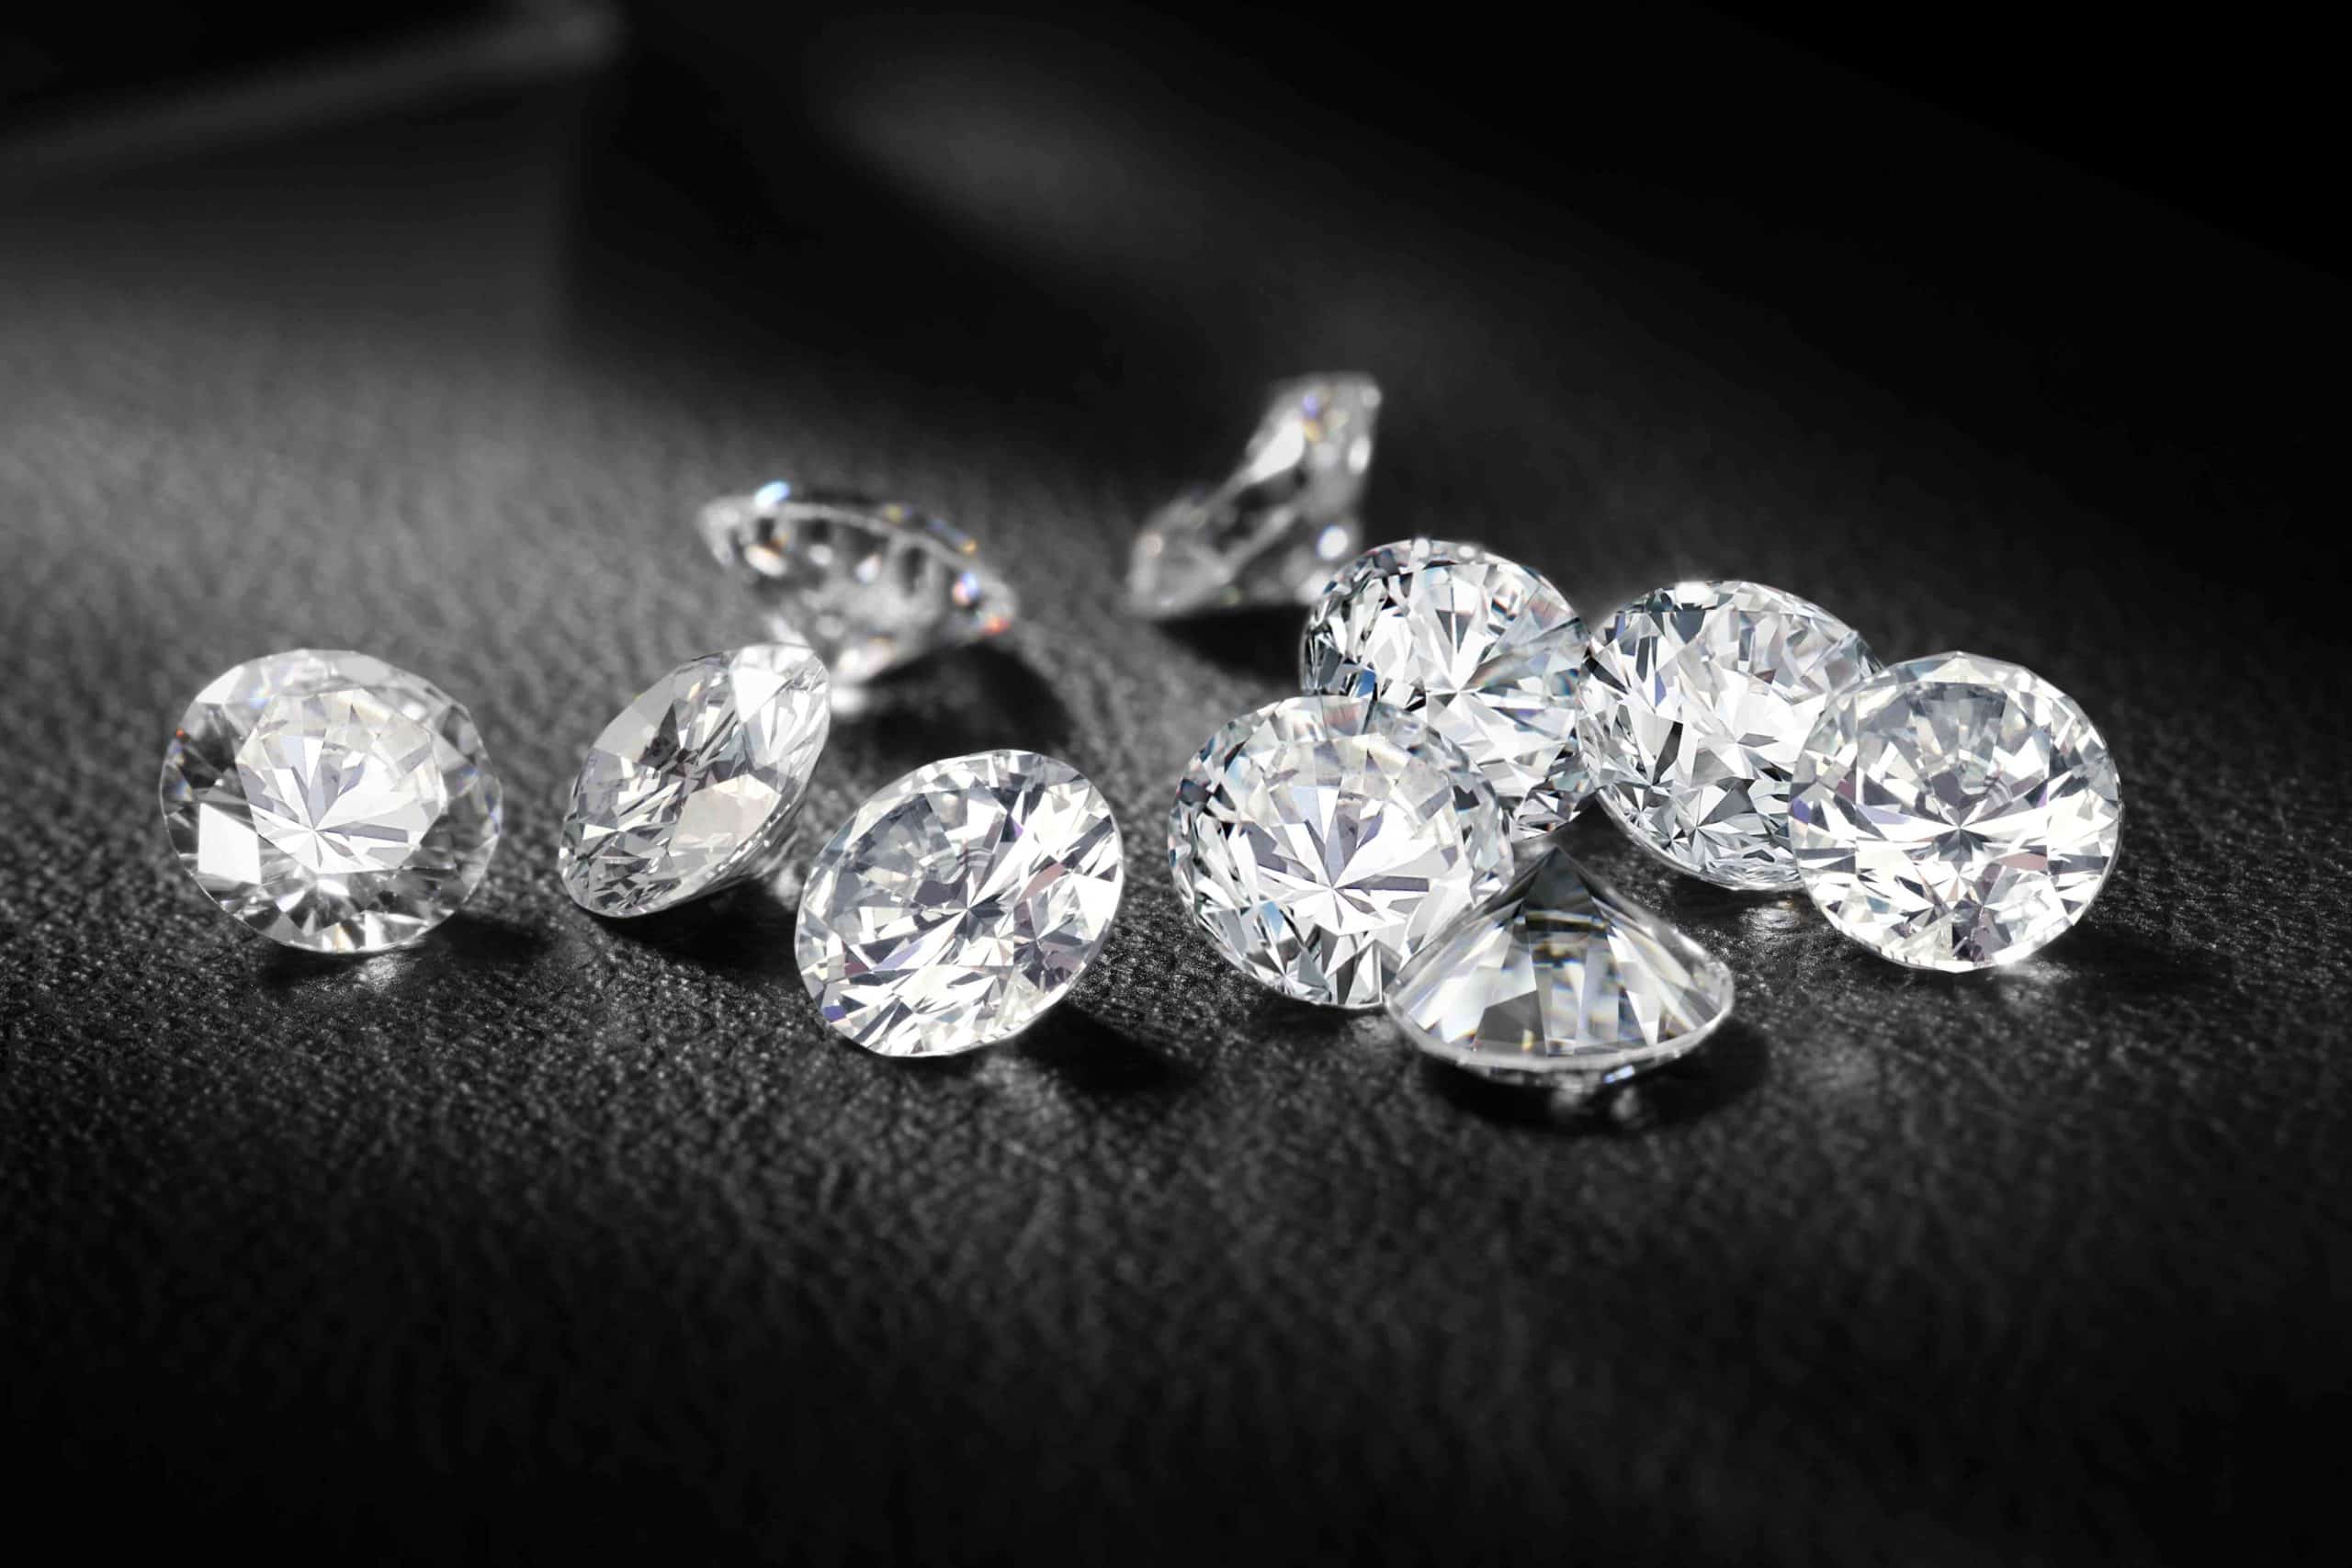 Nehal Modi charged for fraudulently obtaining diamonds worth over US$2.6 million